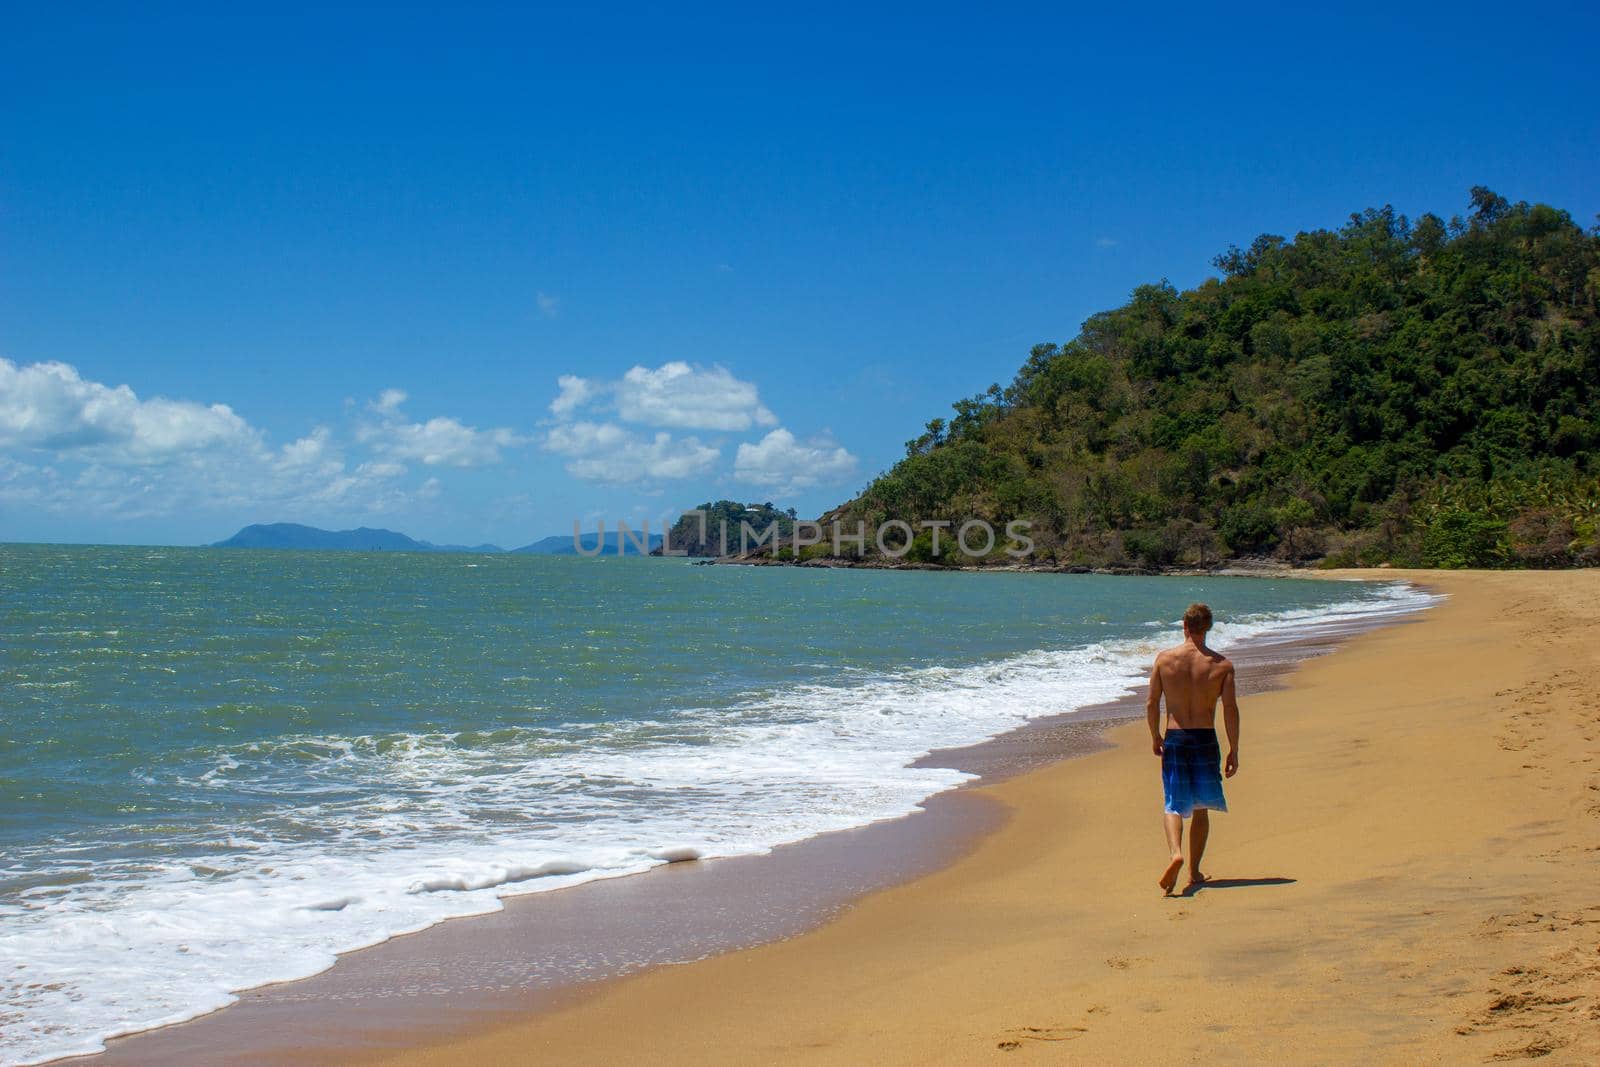 Muscular caucasian man walking on the beach as ocean waves crash behind him, cape tribulation, queensland, australia by bettercallcurry